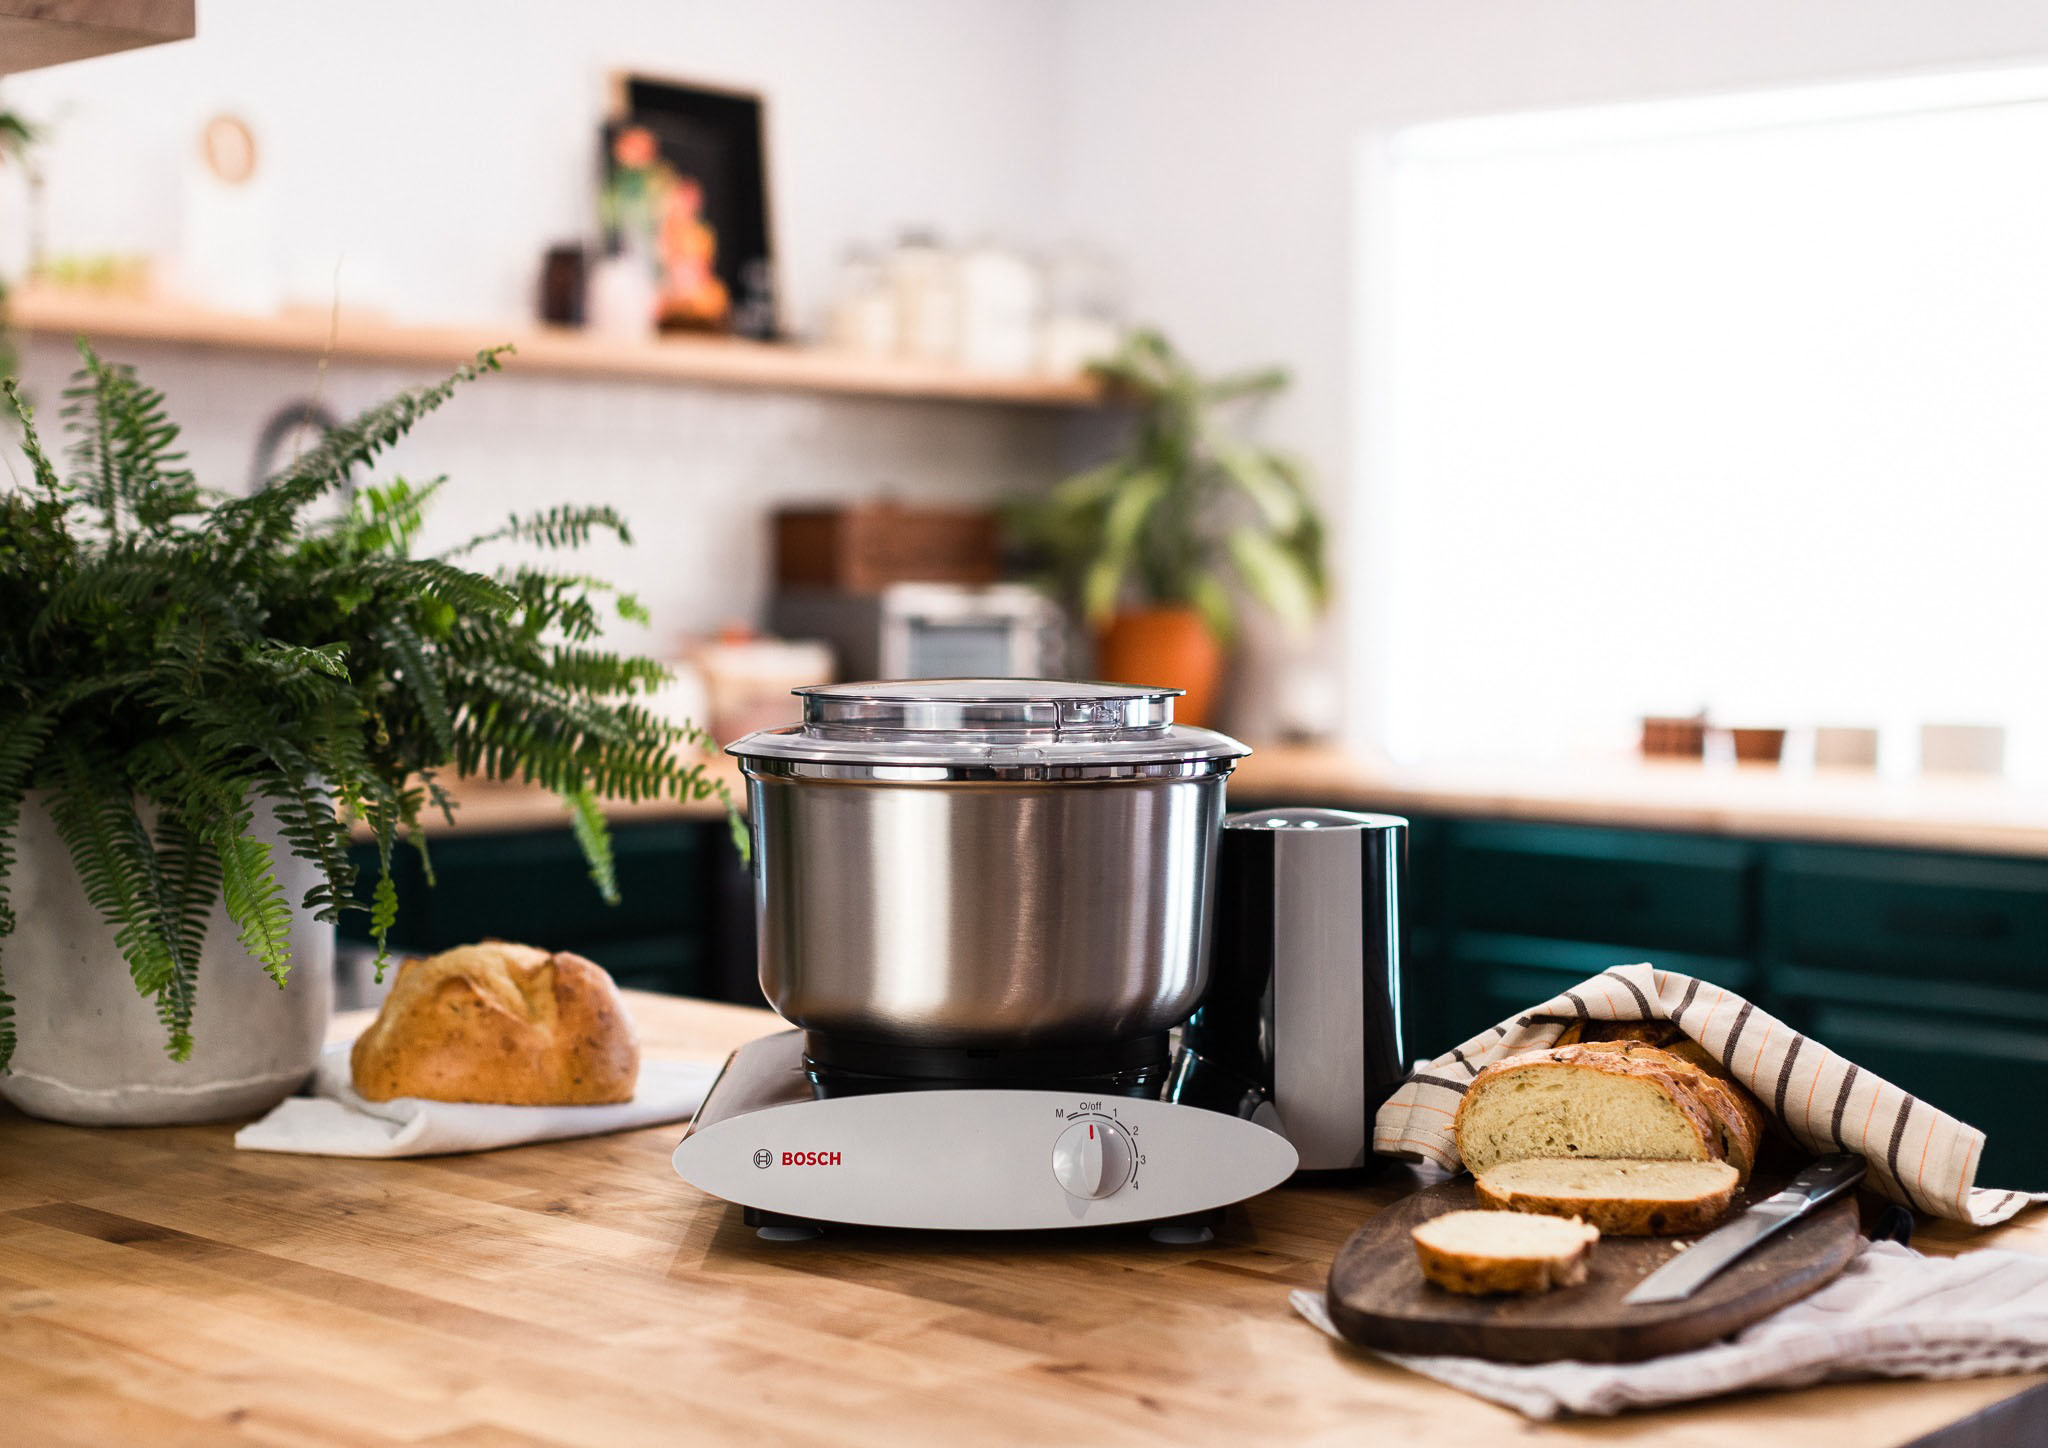  Bosch Universal Plus Food Processor Attachment for Universal  Plus Mixer: Home & Kitchen